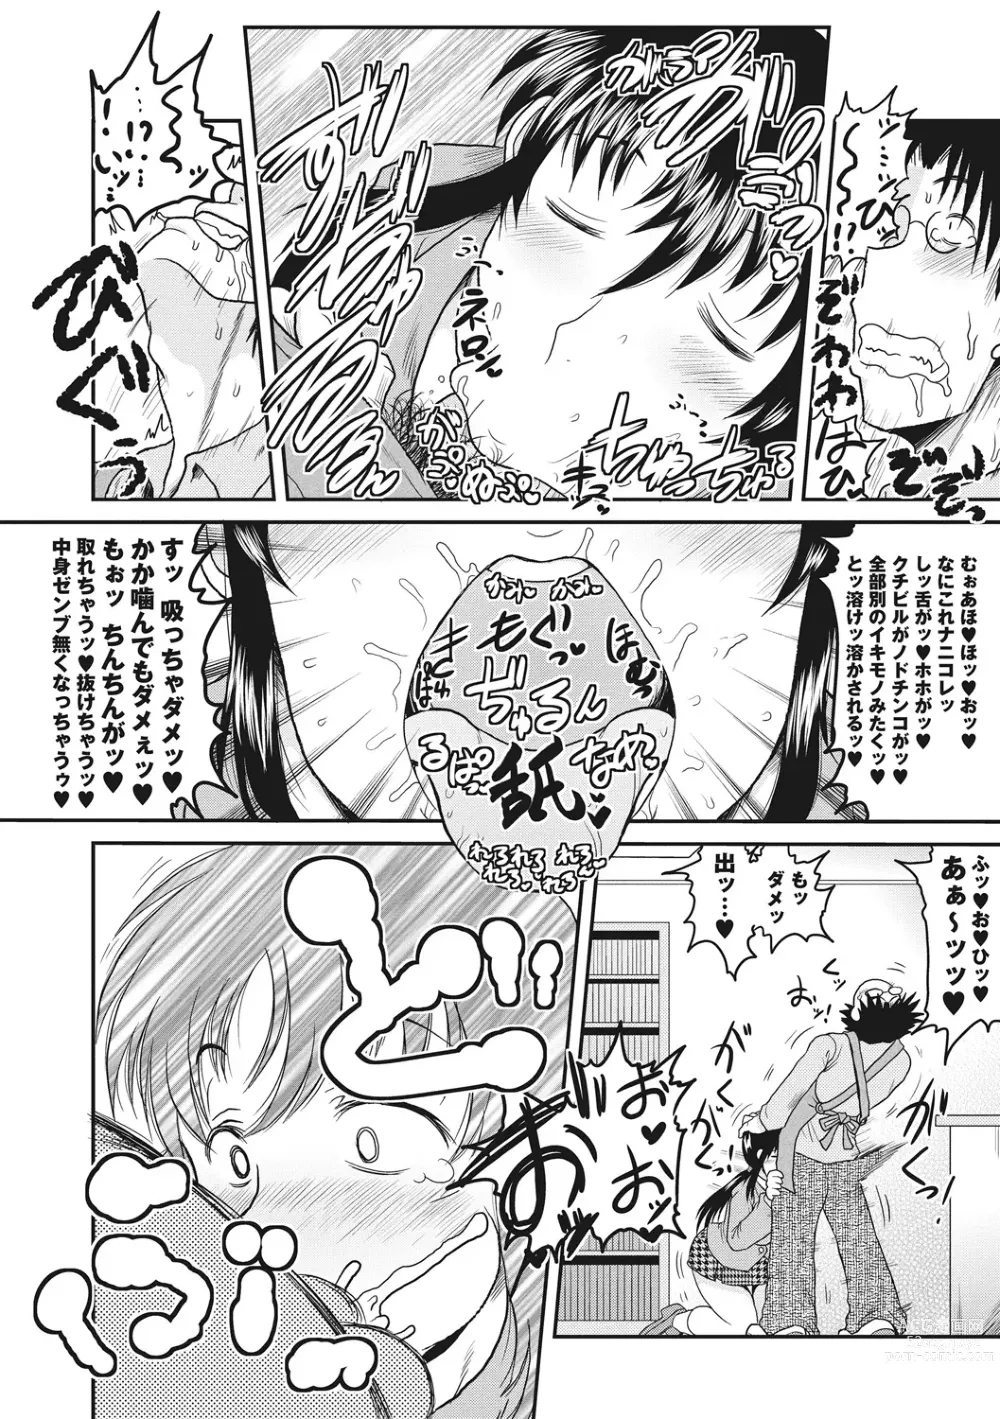 Page 13 of manga Deep Impact